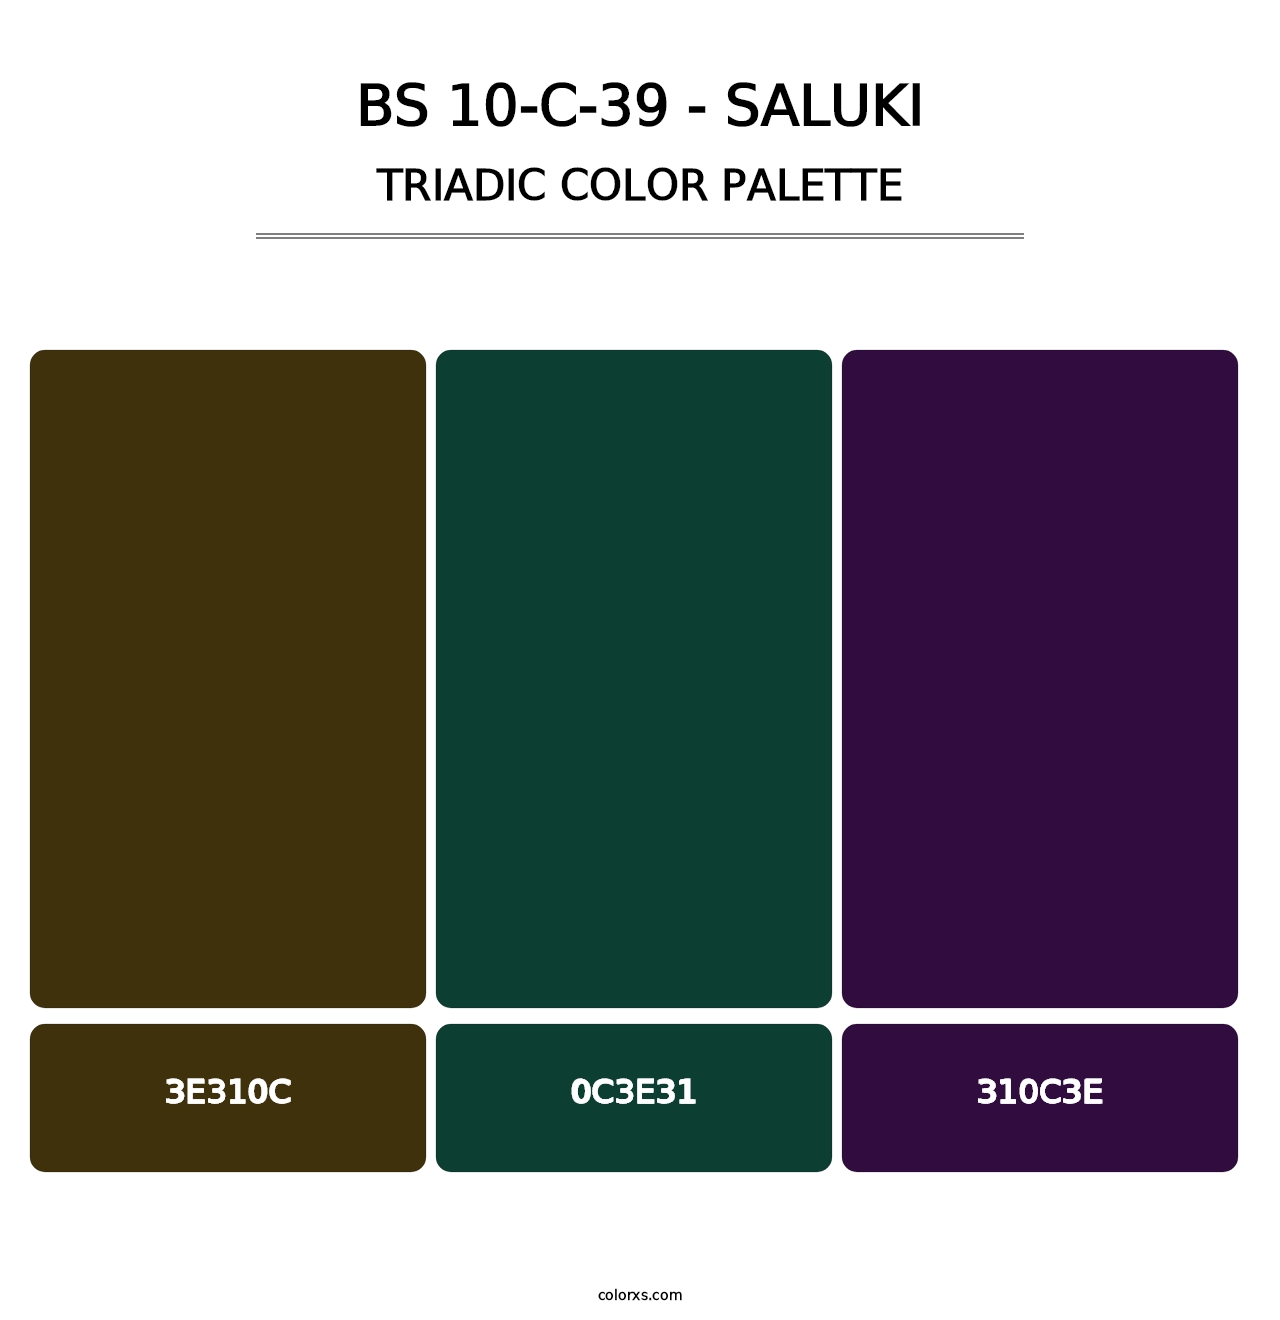 BS 10-C-39 - Saluki - Triadic Color Palette